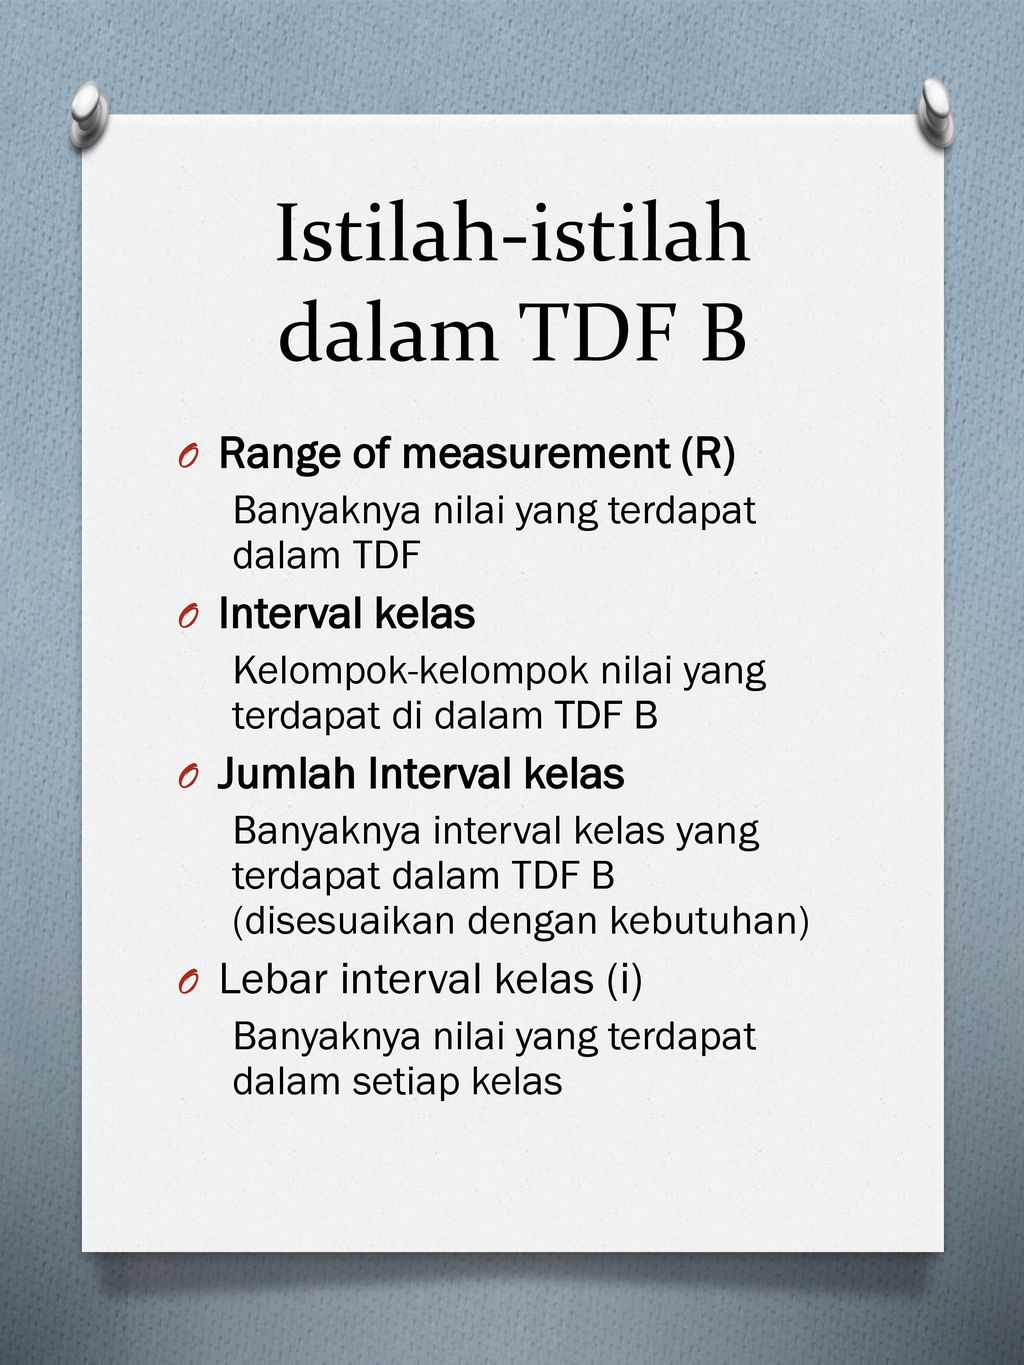 Istilah-istilah dalam TDF B